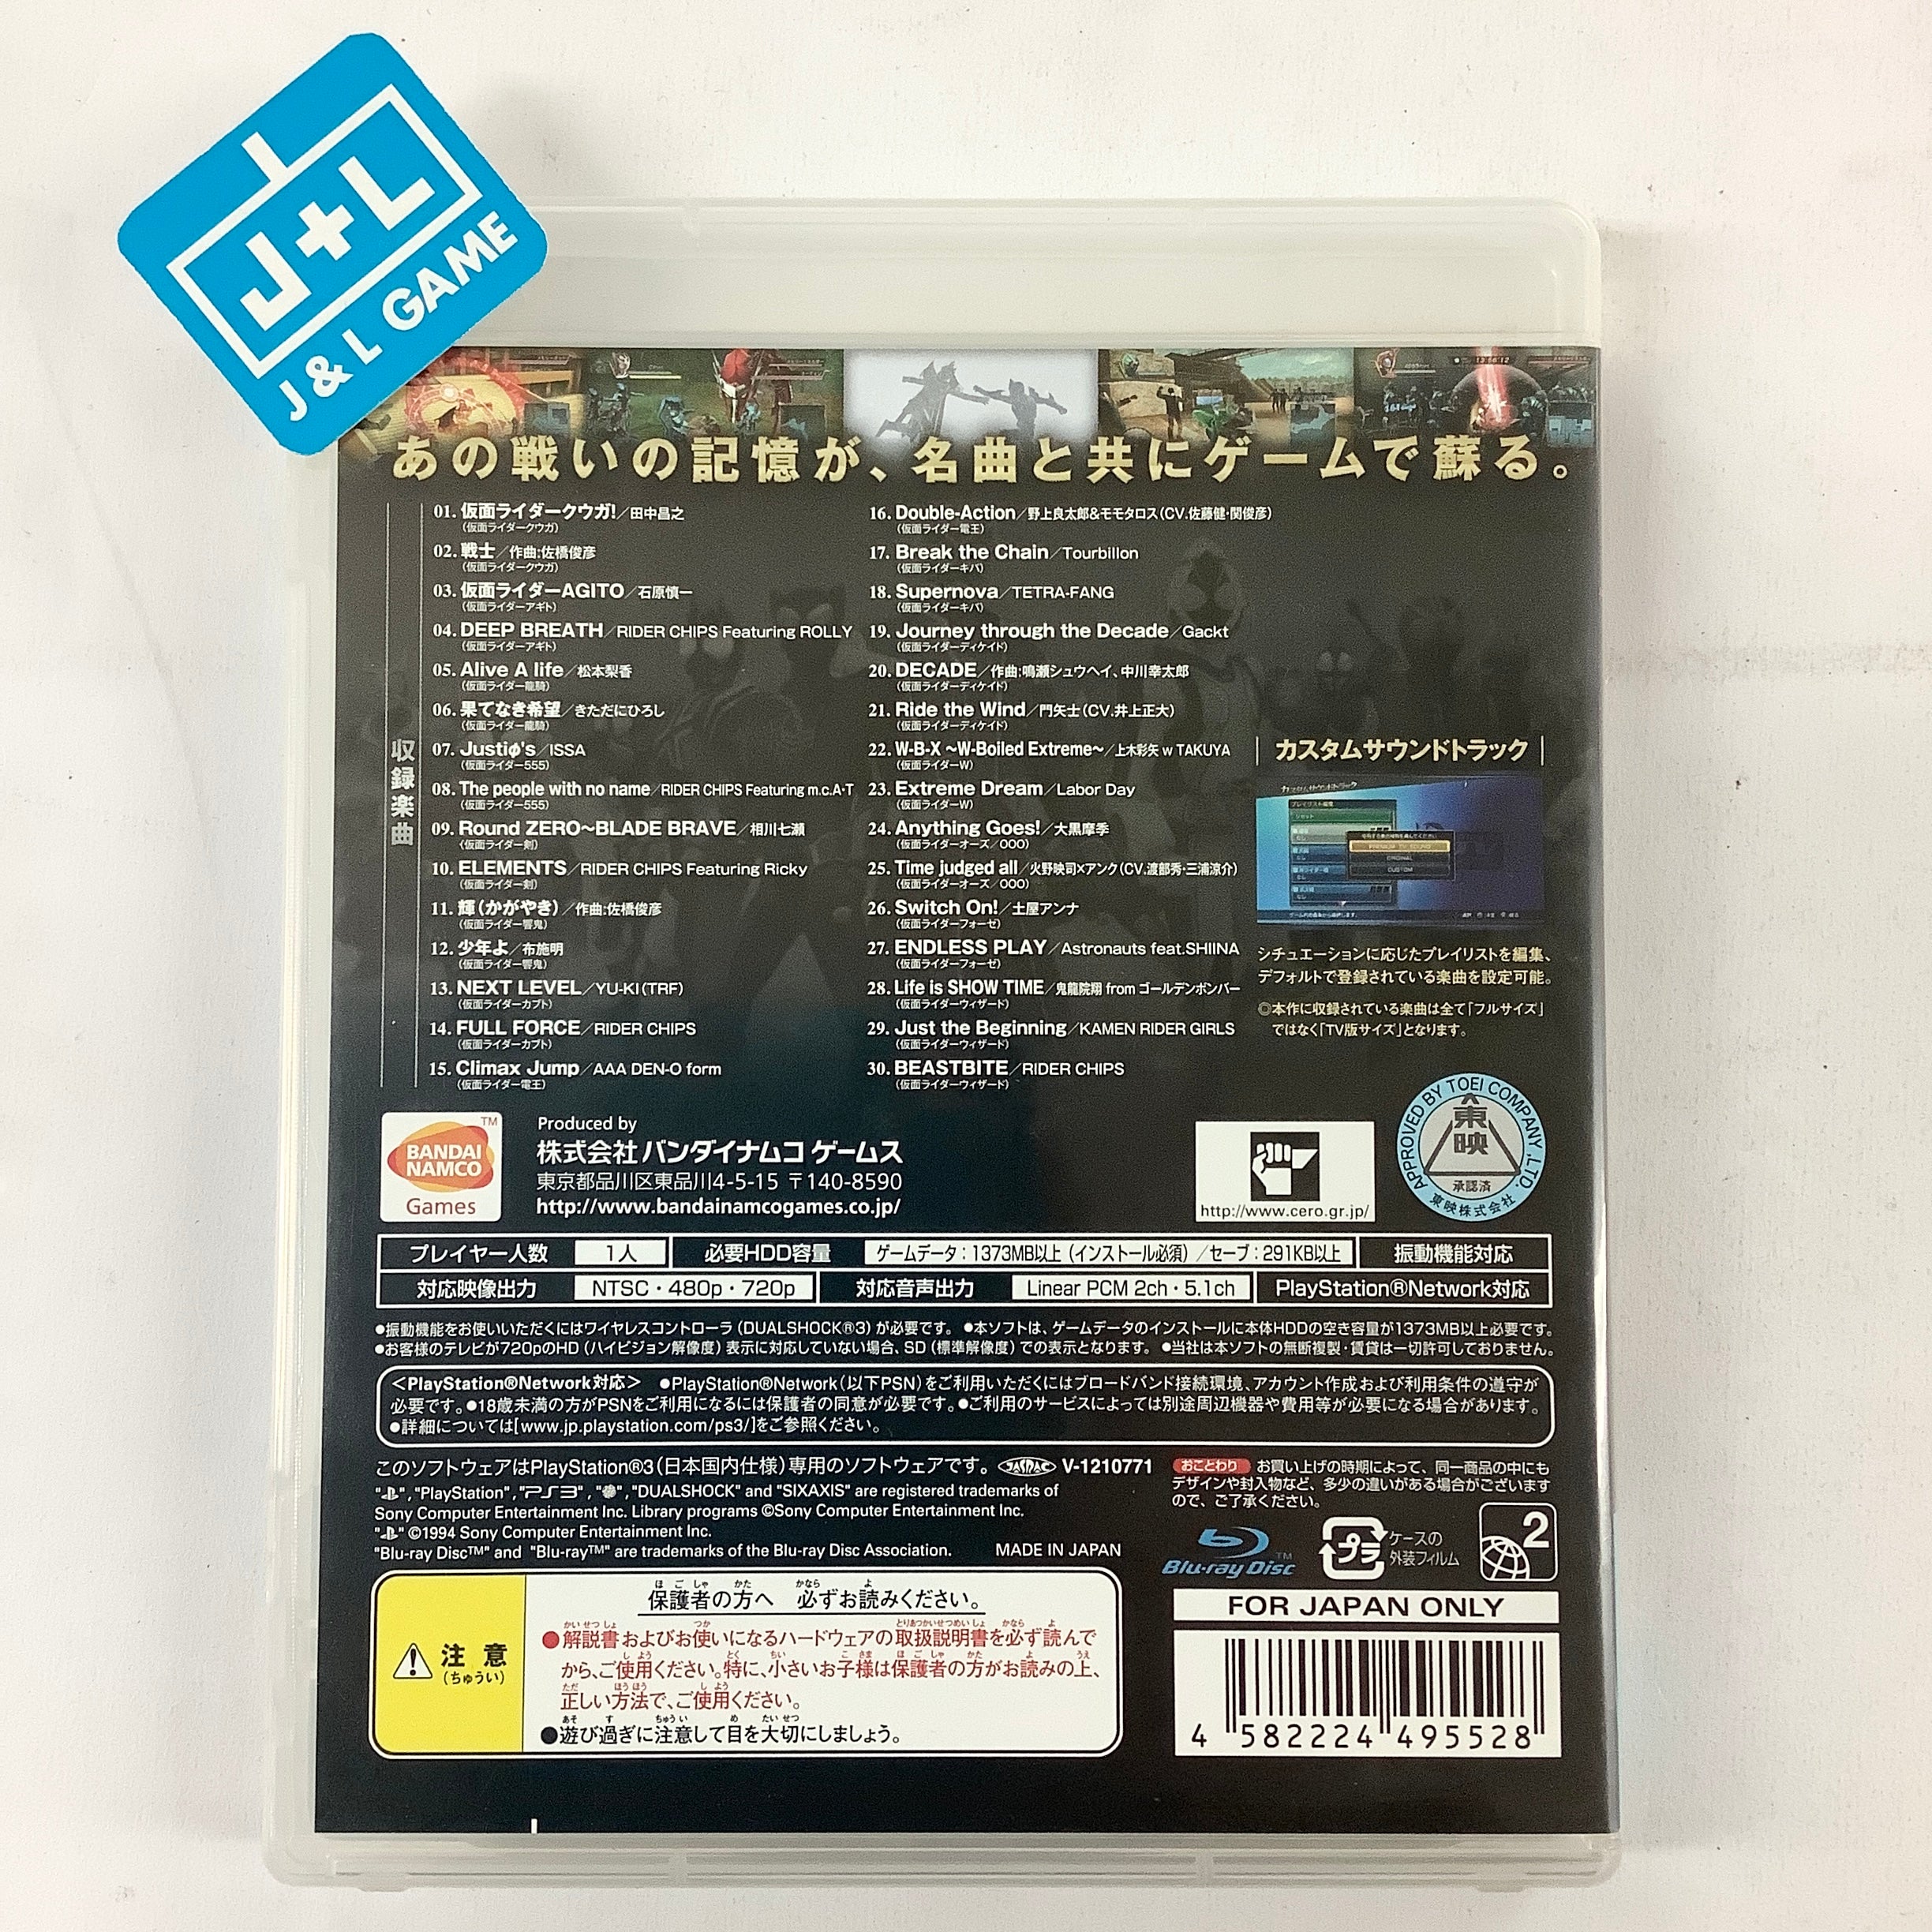 Kamen Rider: Battride War (Premium TV Sound Edition) - (PS3) PlayStation 3 [Pre-Owned] (Japanese Import) Video Games Bandai Namco Games   